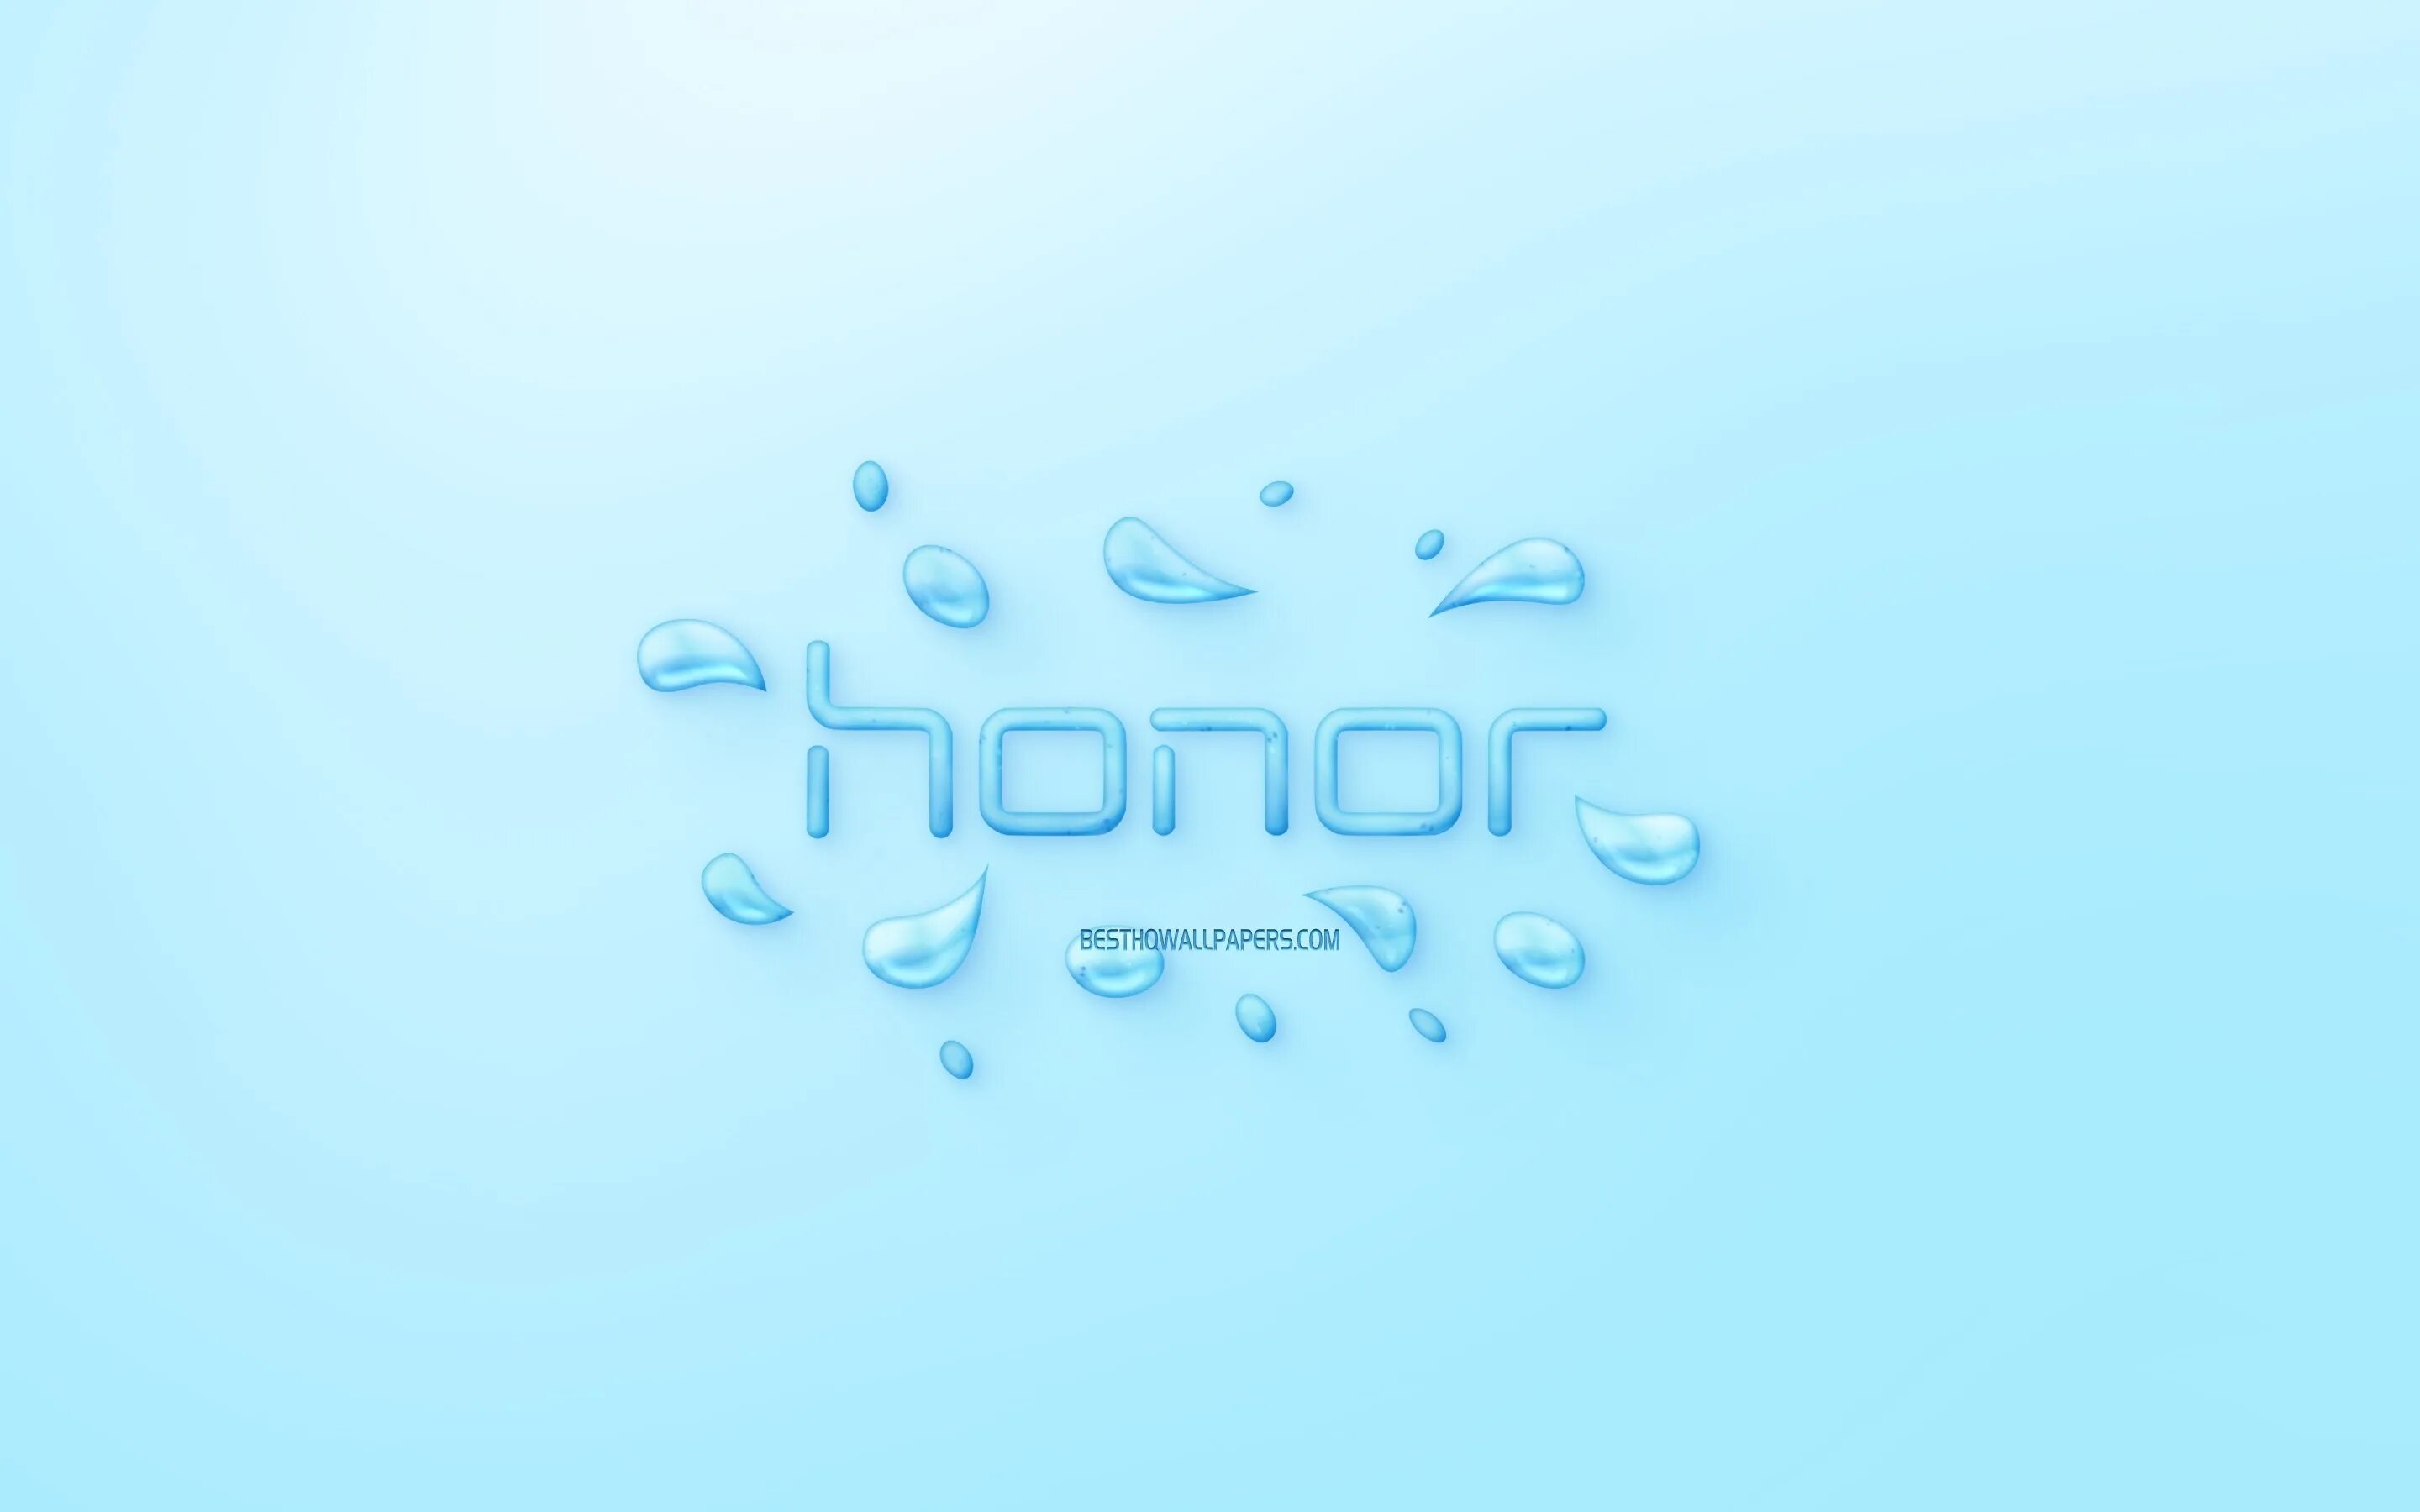 Живые обои honor. Заставка Honor. Honor логотип. Обои с логотипом Honor. Honor заставка на рабочий стол.